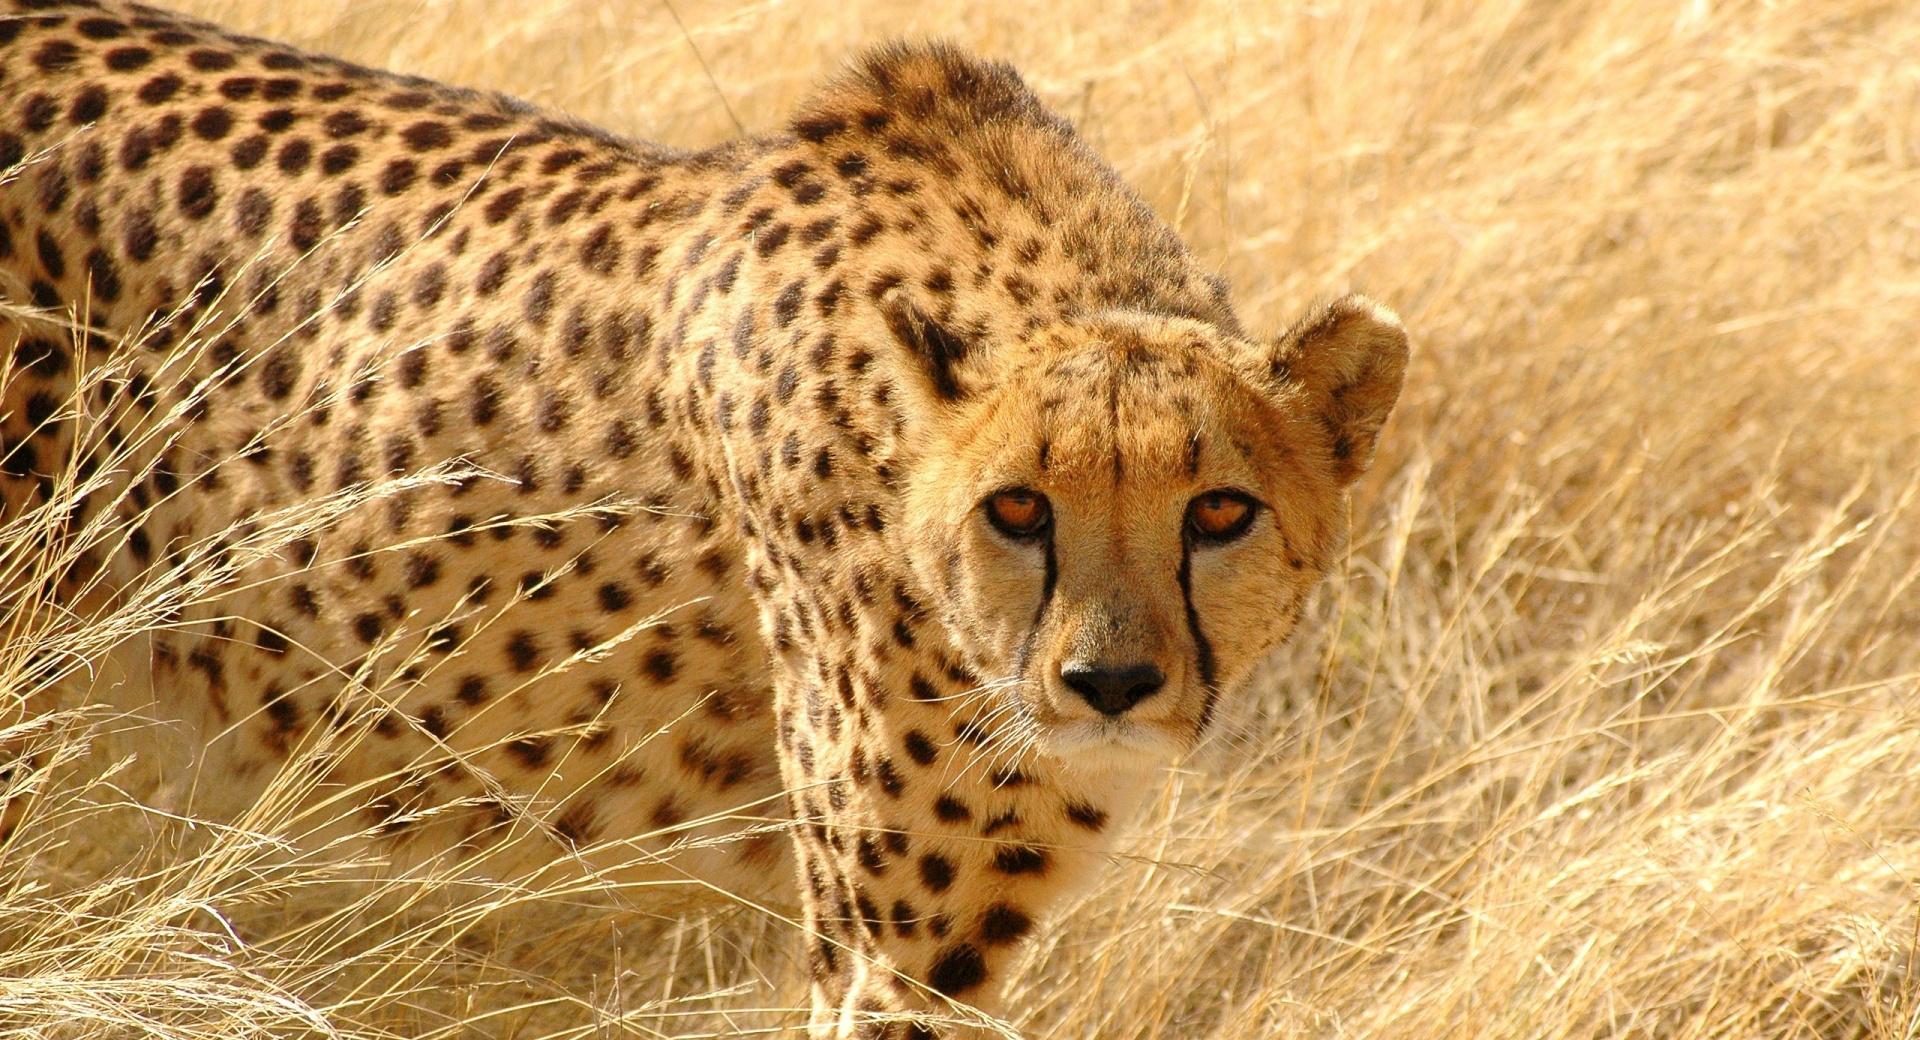 Cheetah Wildlife at 1024 x 1024 iPad size wallpapers HD quality